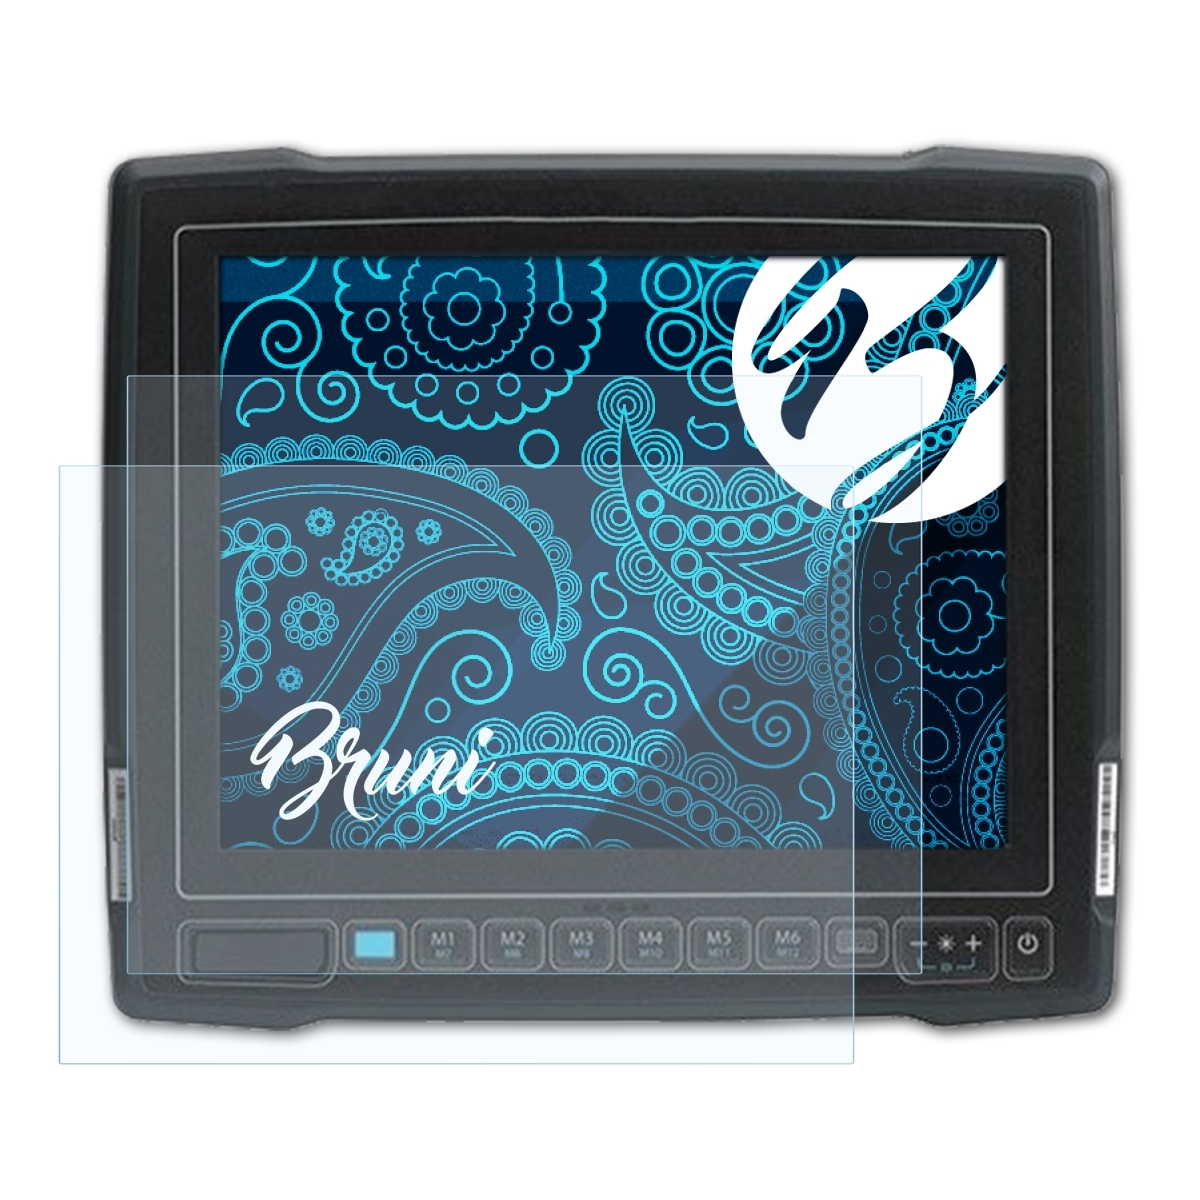 BRUNI 2x Basics-Clear Schutzfolie(für Zebra VC80x)